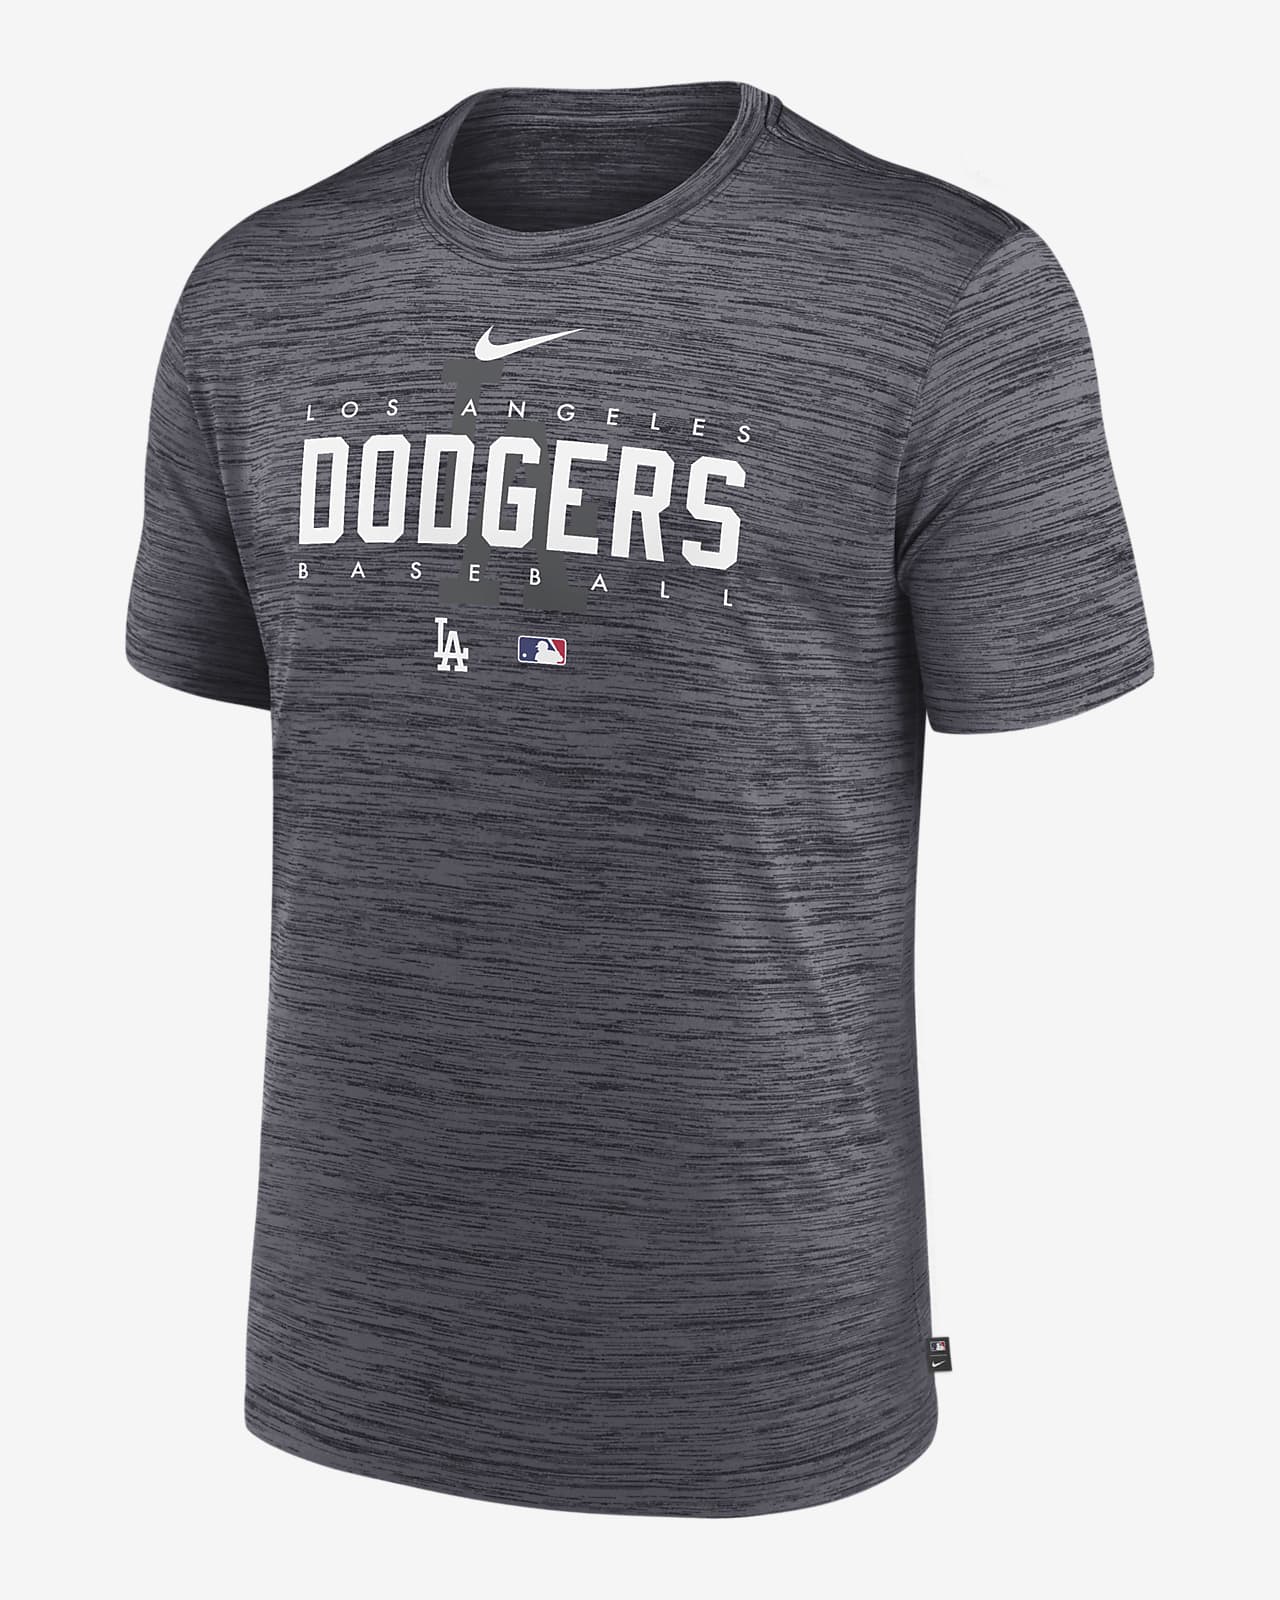 Nike Dri-FIT Velocity Practice (MLB Los Angeles Dodgers) Men's T-Shirt. Nike .com